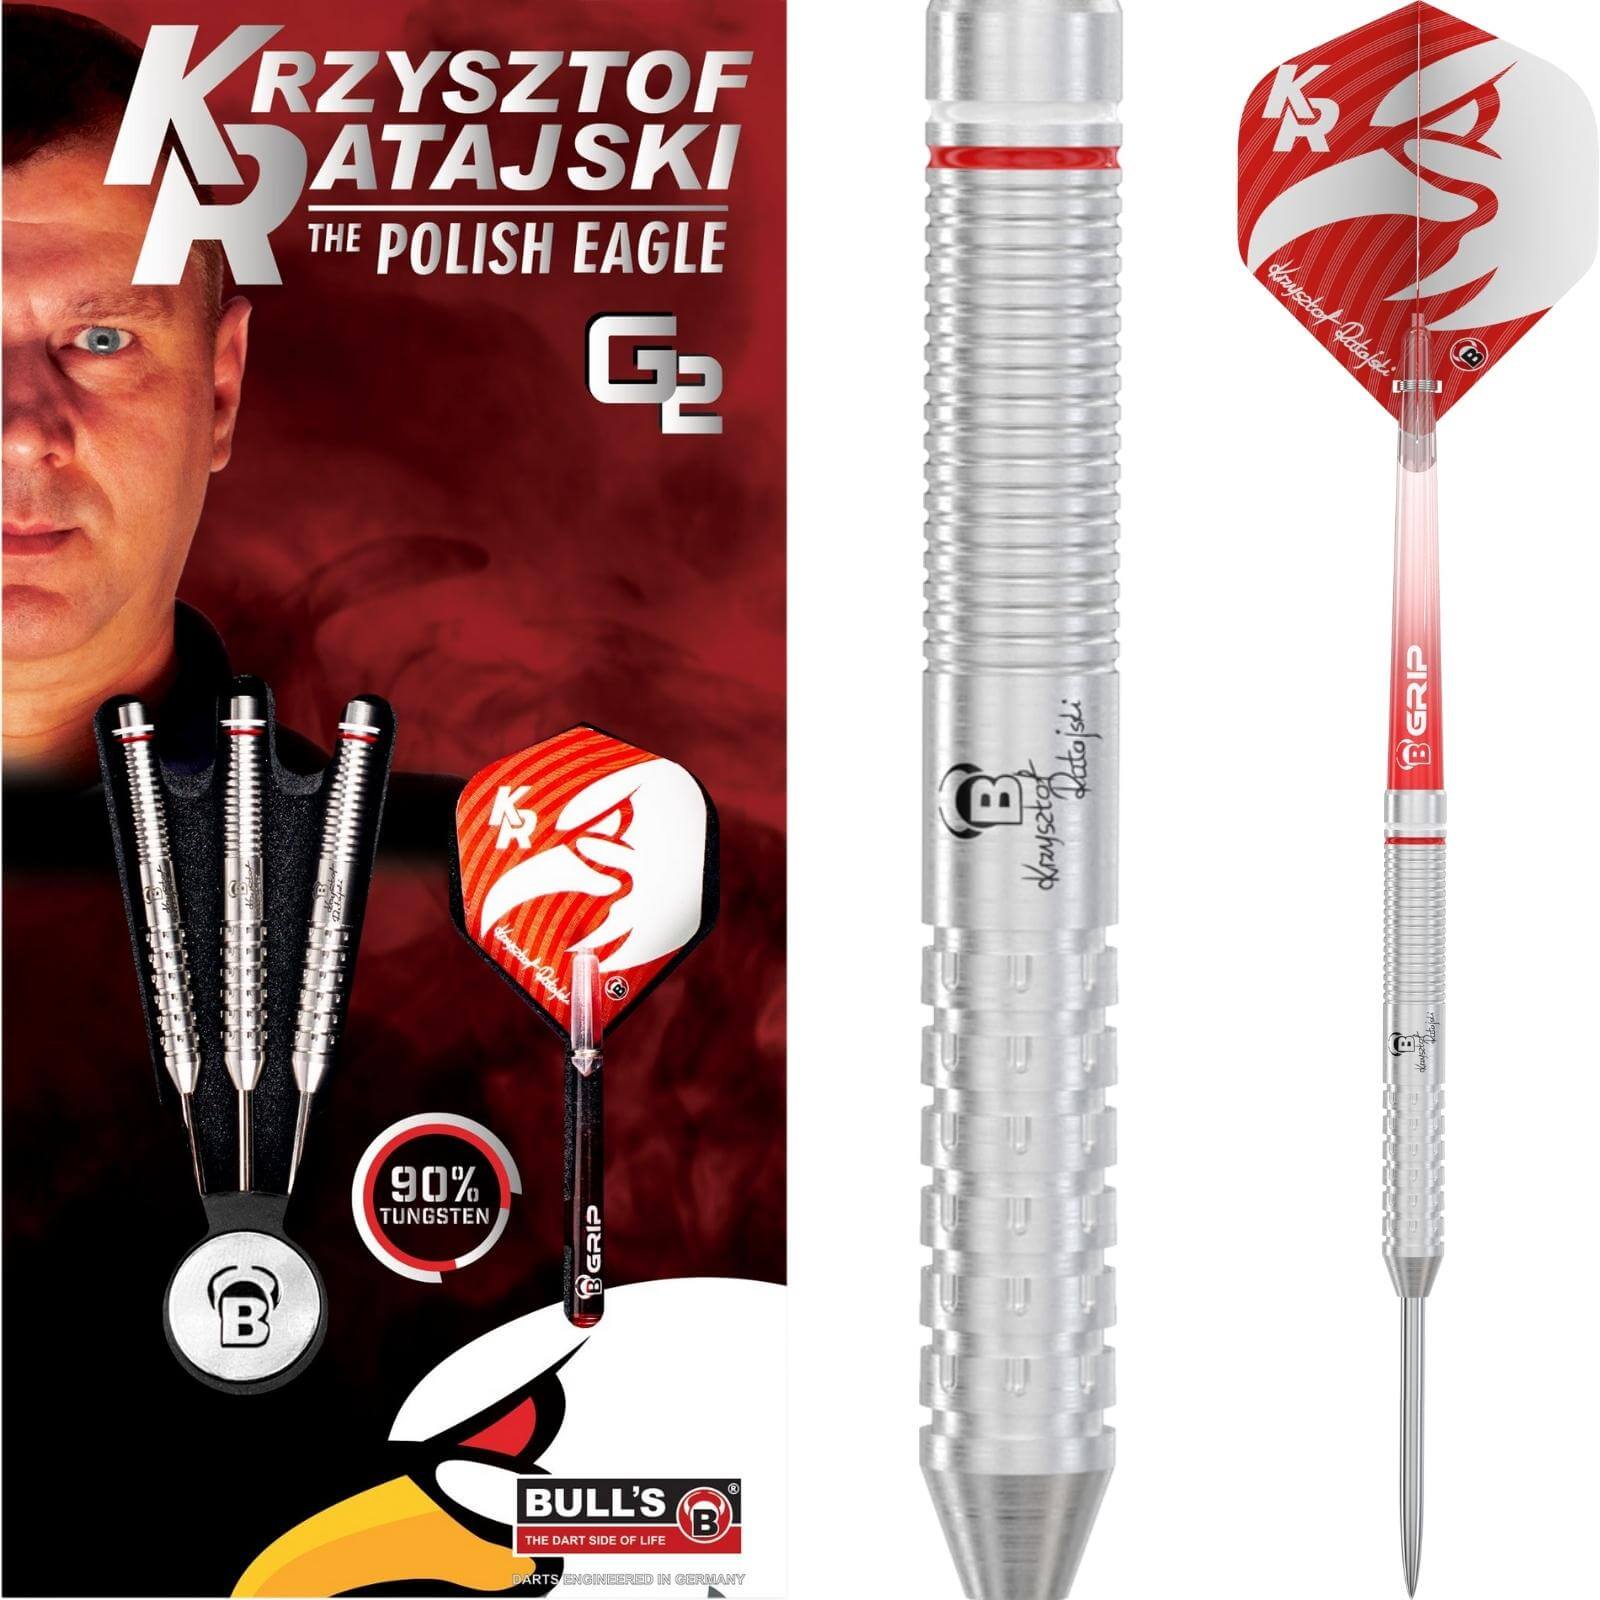 Darts - BULL'S - Krzysztof Ratajski Gen 2 Darts - Steel Tip - 90% Tungsten - 22g 24g 26g 